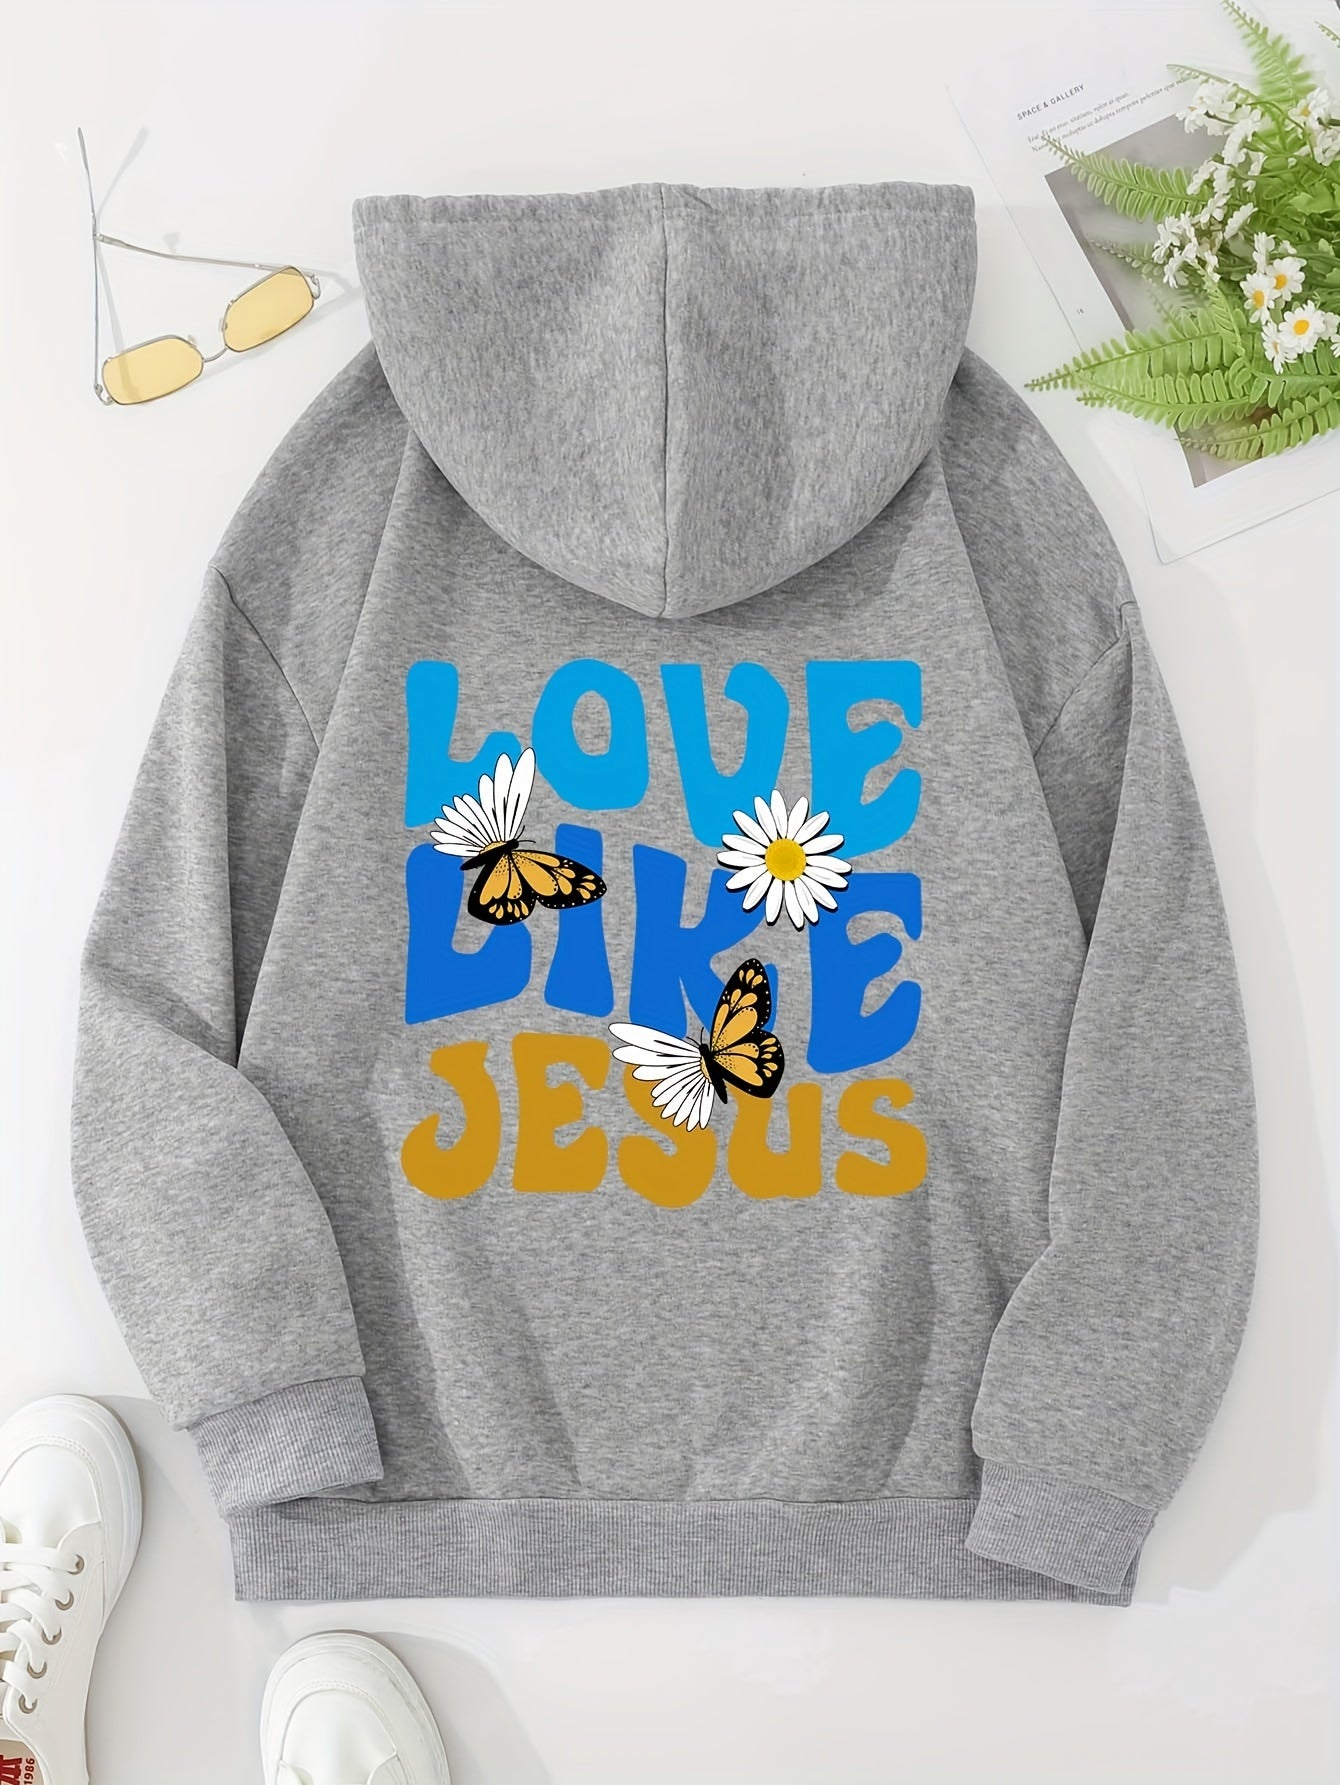 Love Like Jesus (butterfly sunflower) Women's Christian Pullover Hooded Sweatshirt claimedbygoddesigns